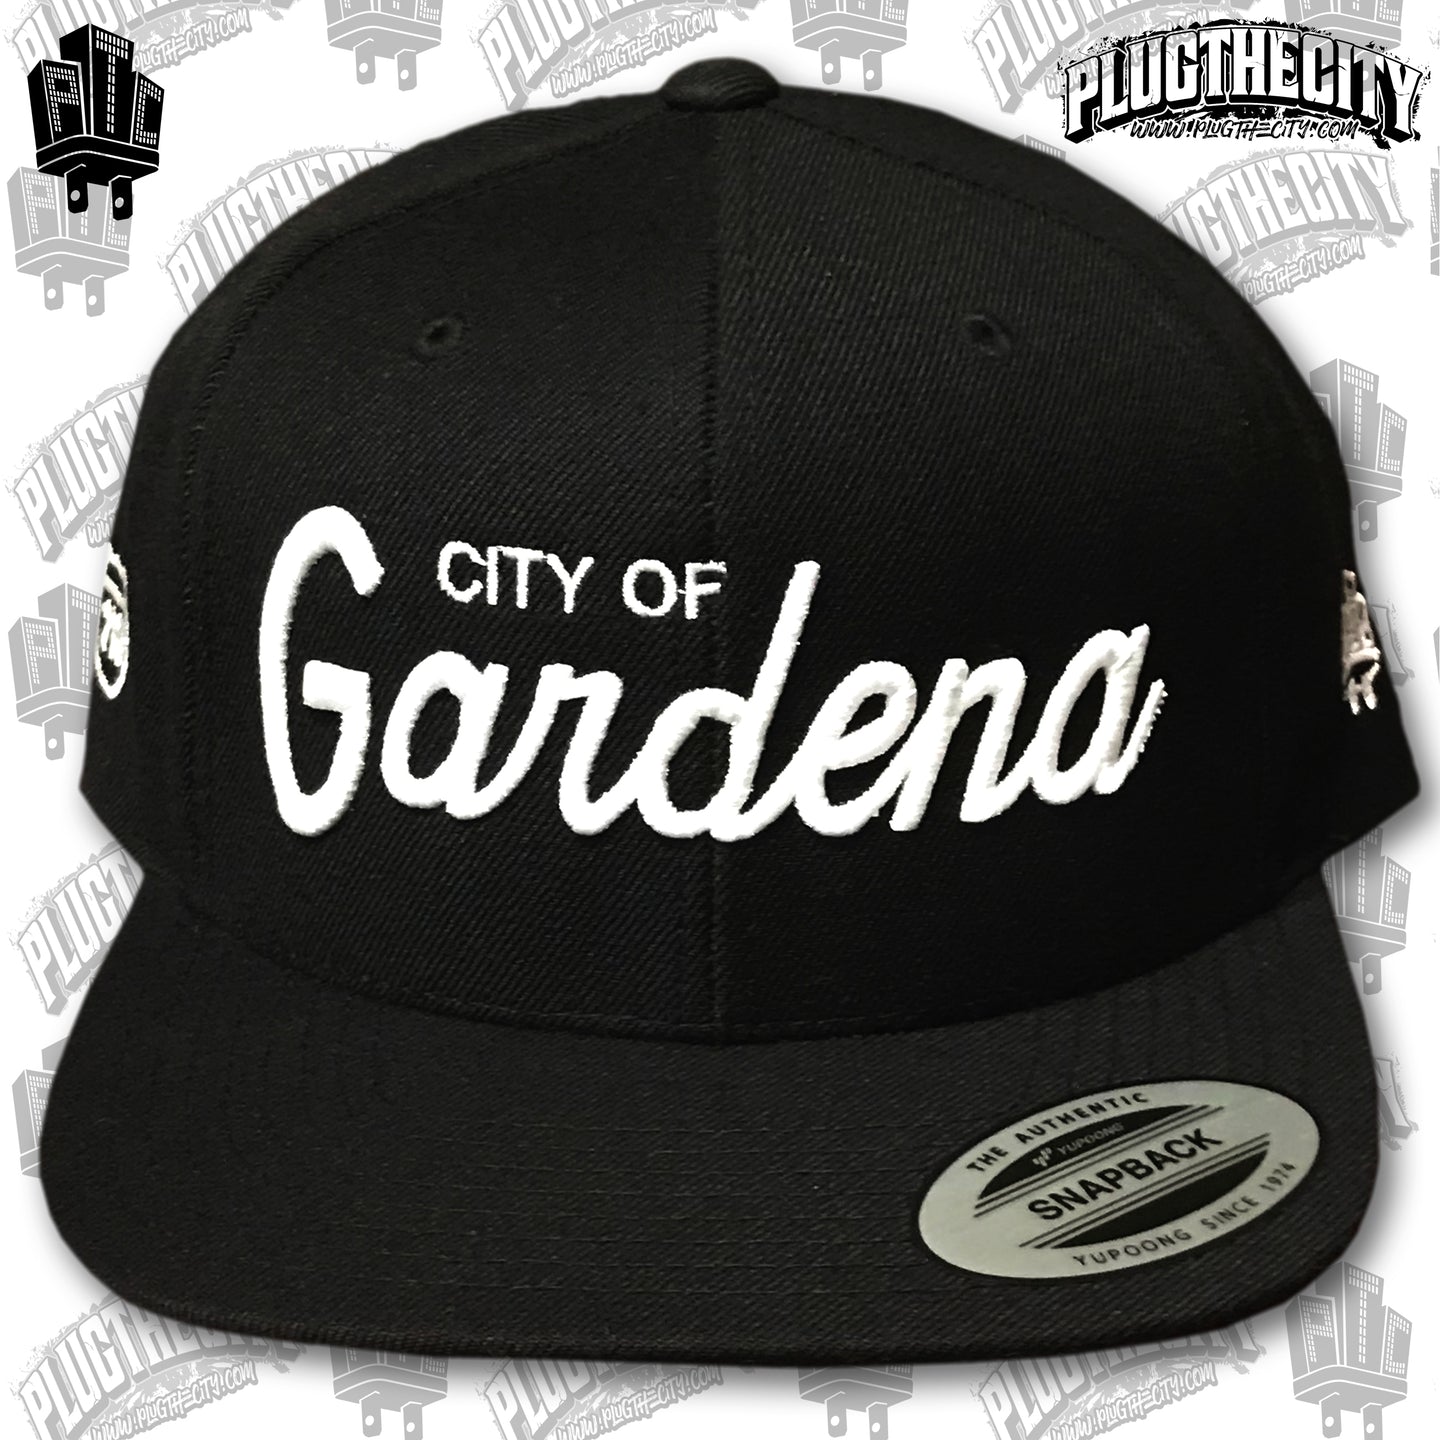 City of Gardena-91West & PTC logos on the side of snapback baseball hat-Color:Black